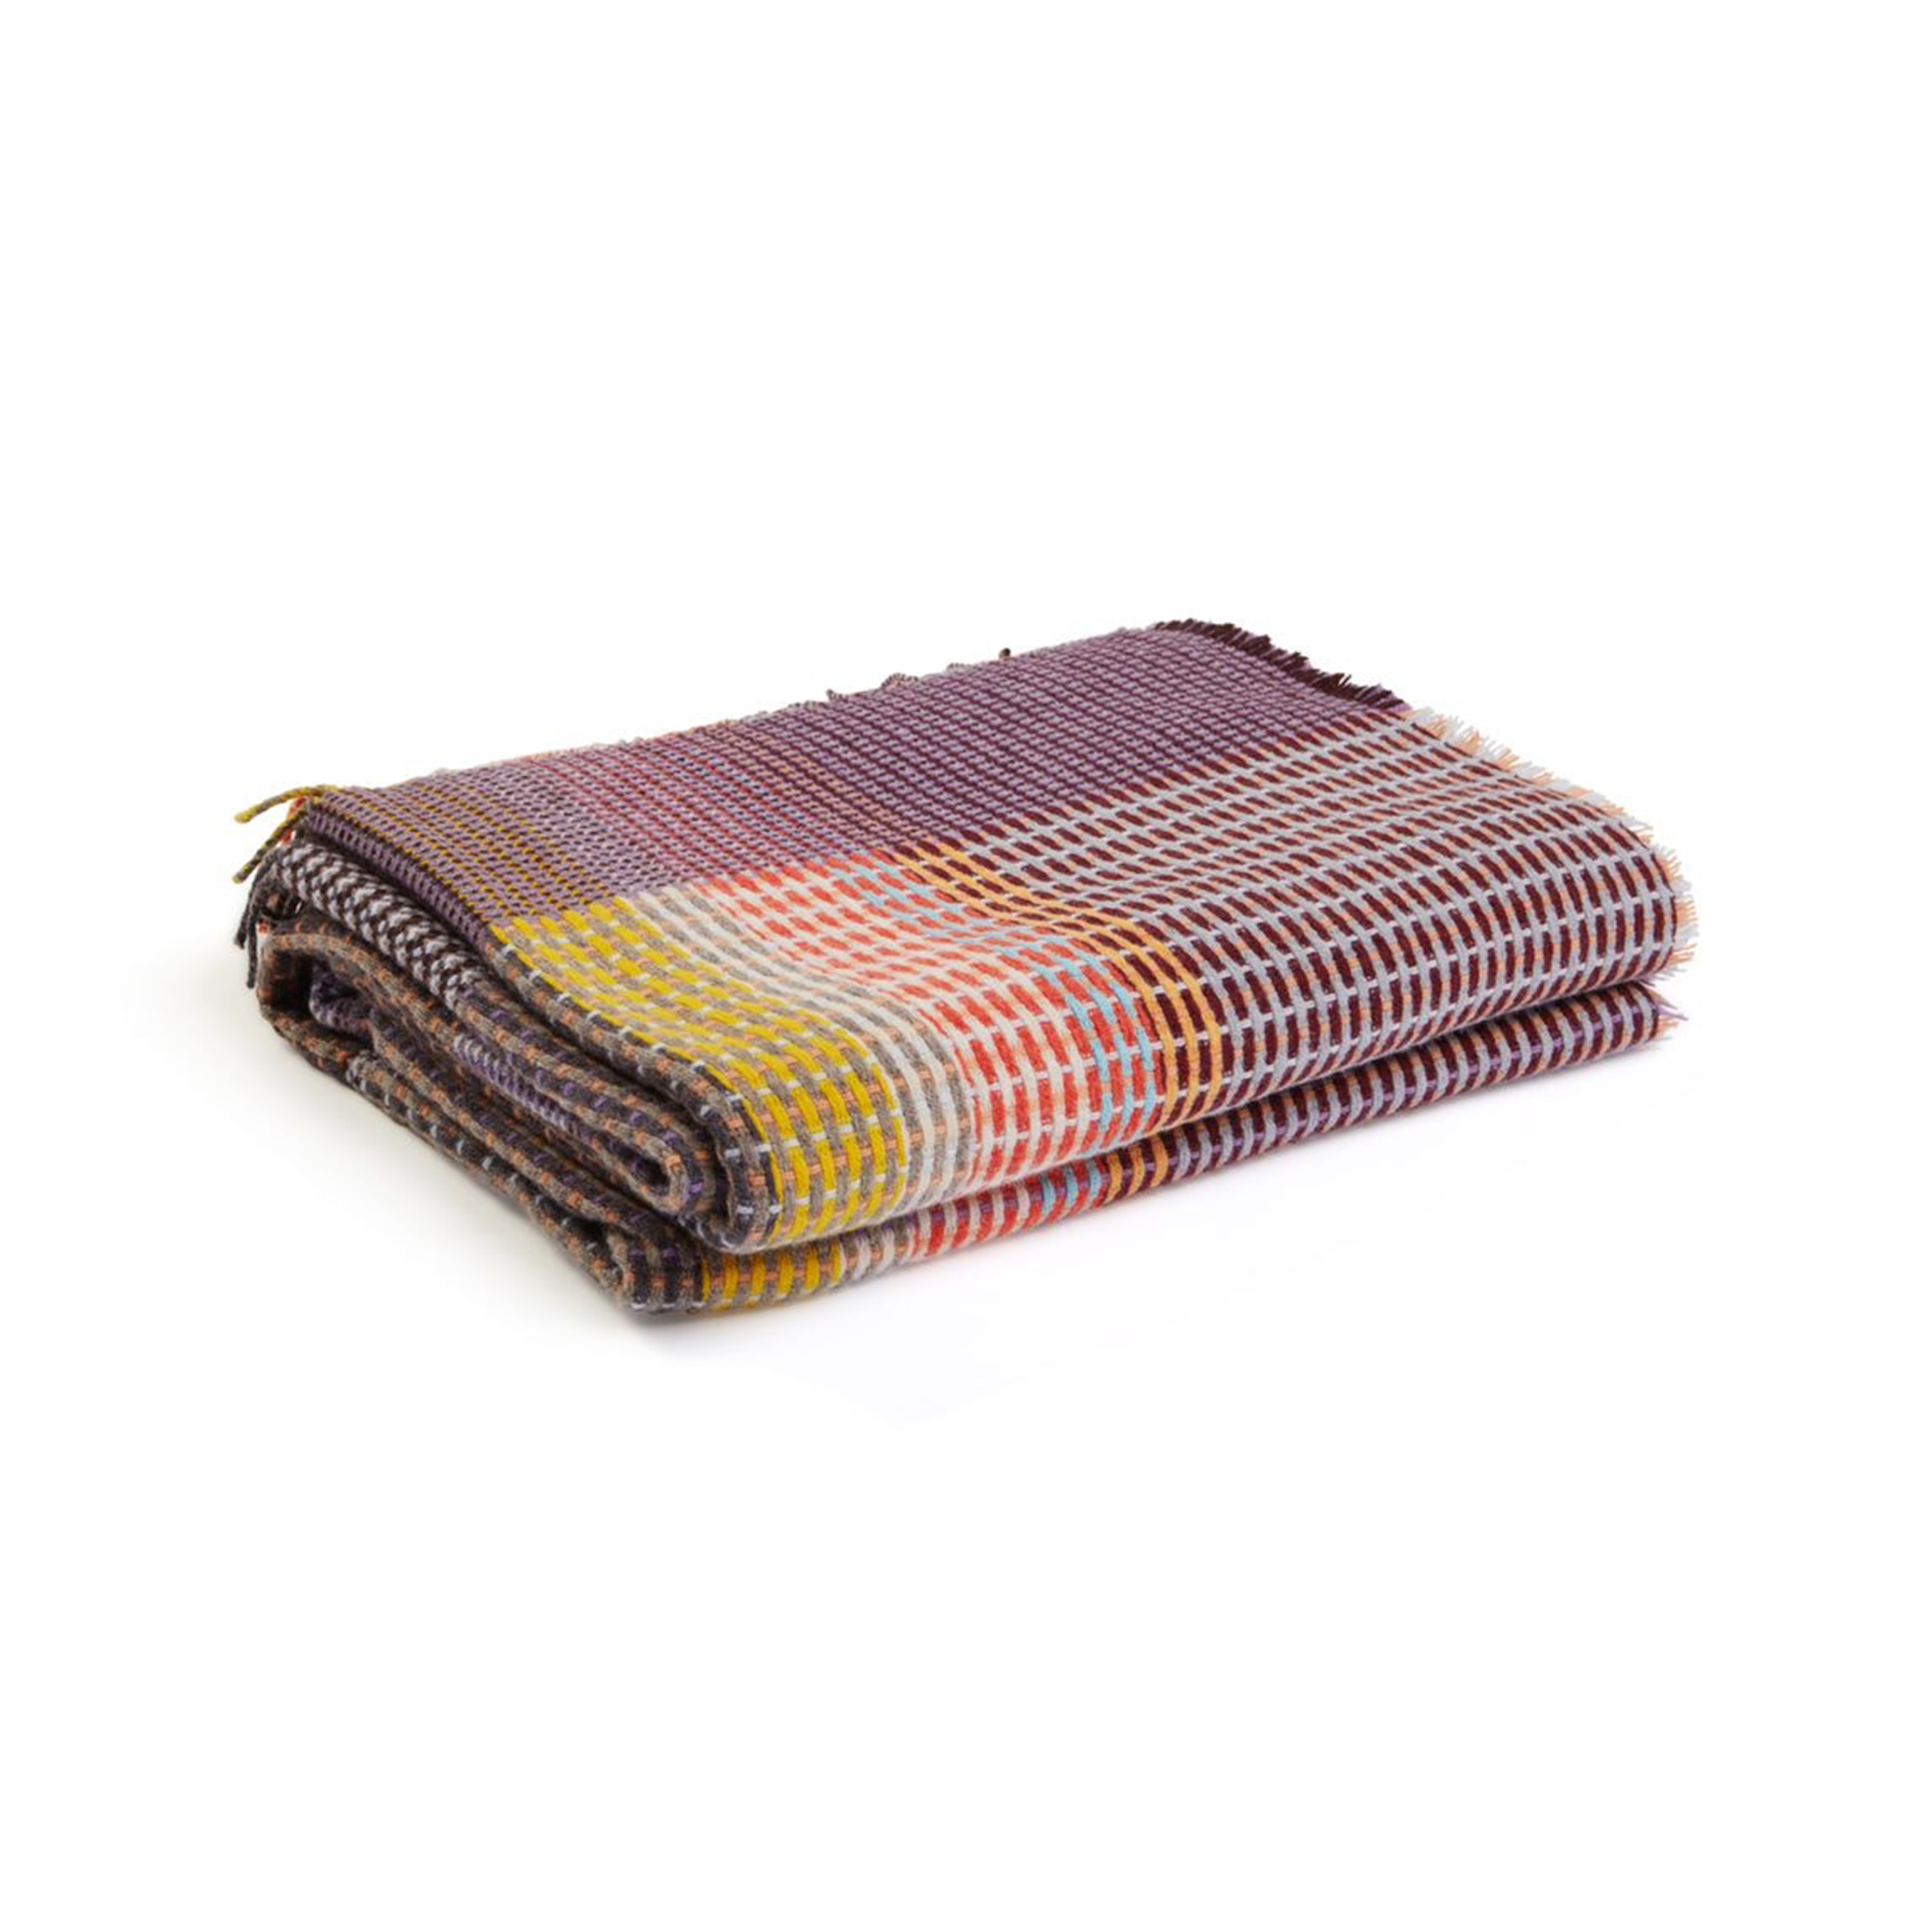 Shakalaka Woven Blanket – Lesley Evers